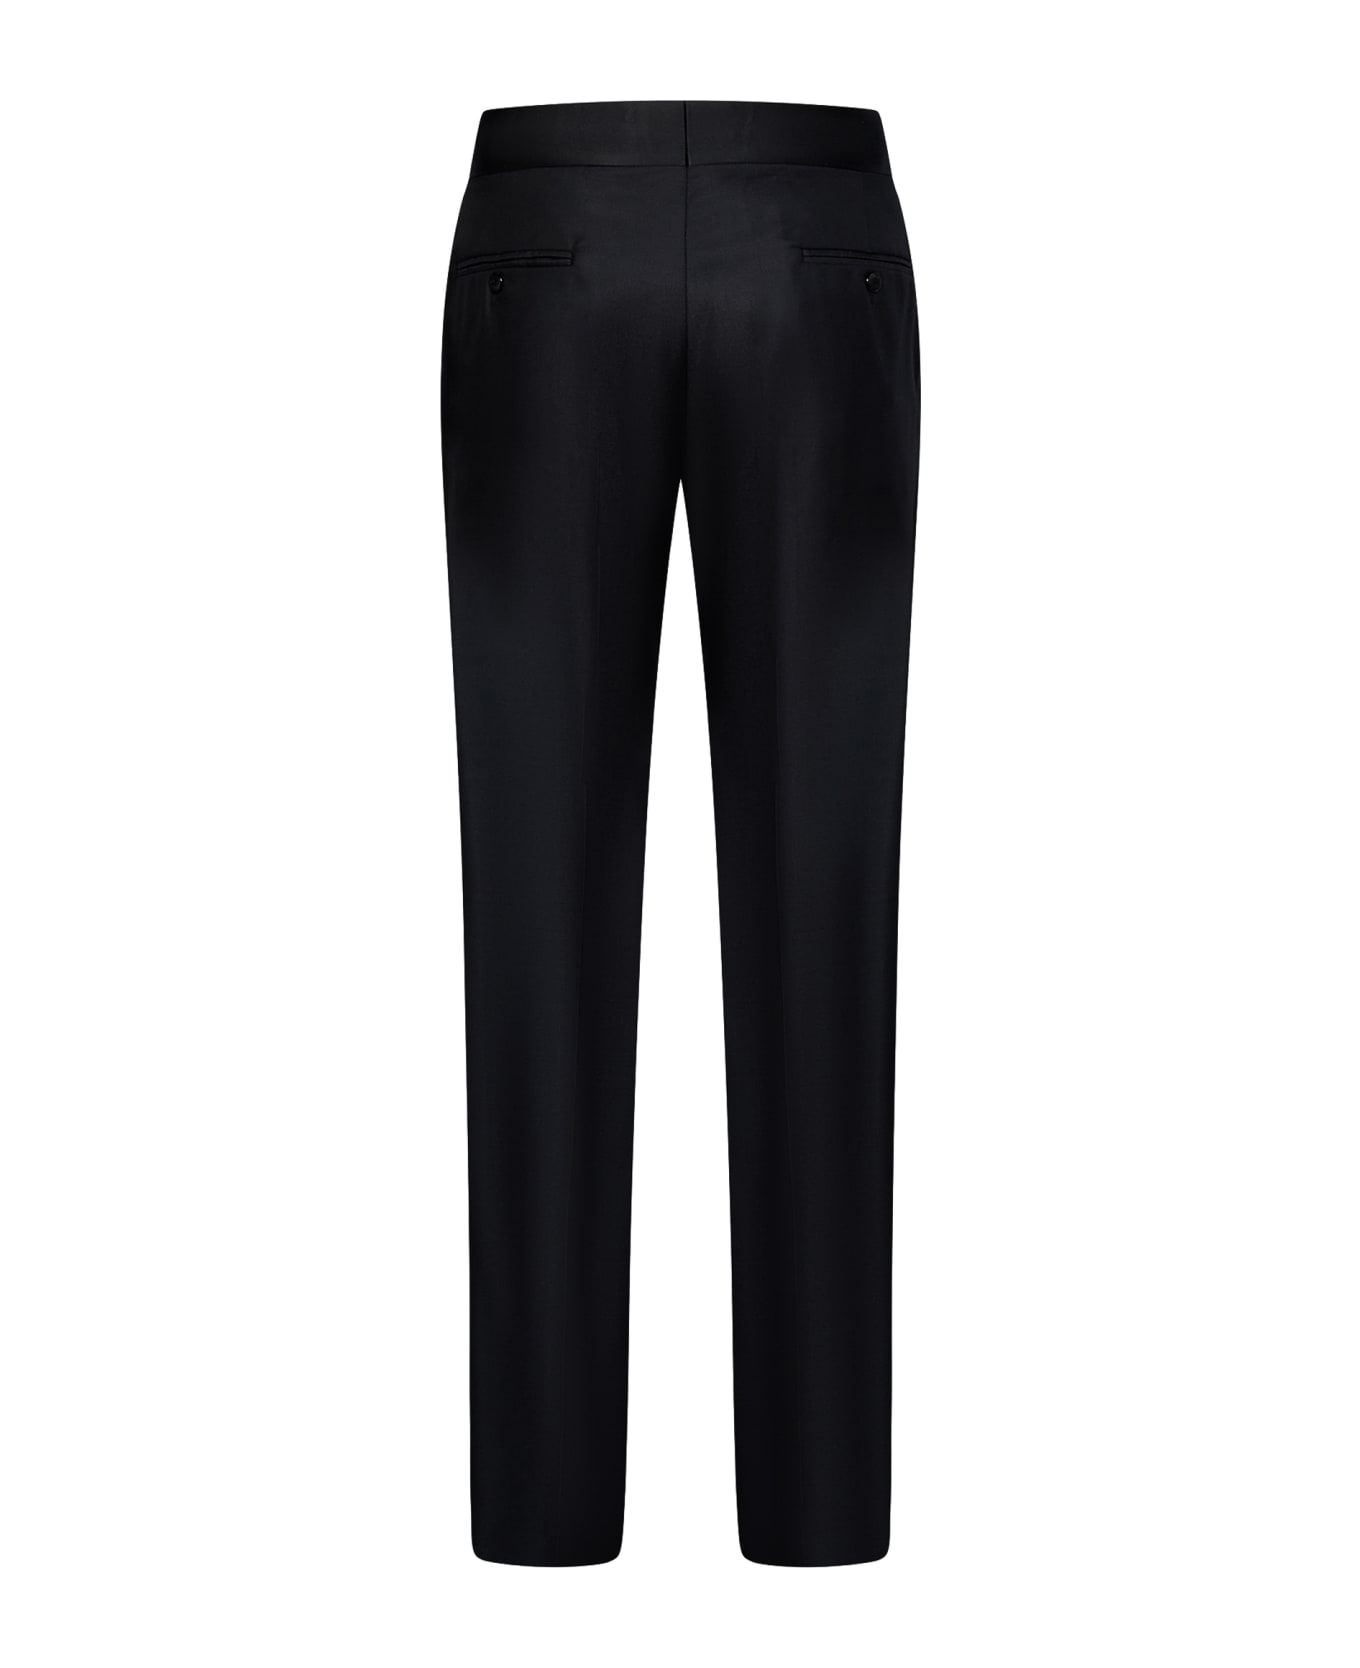 Emporio Armani Suit - Black